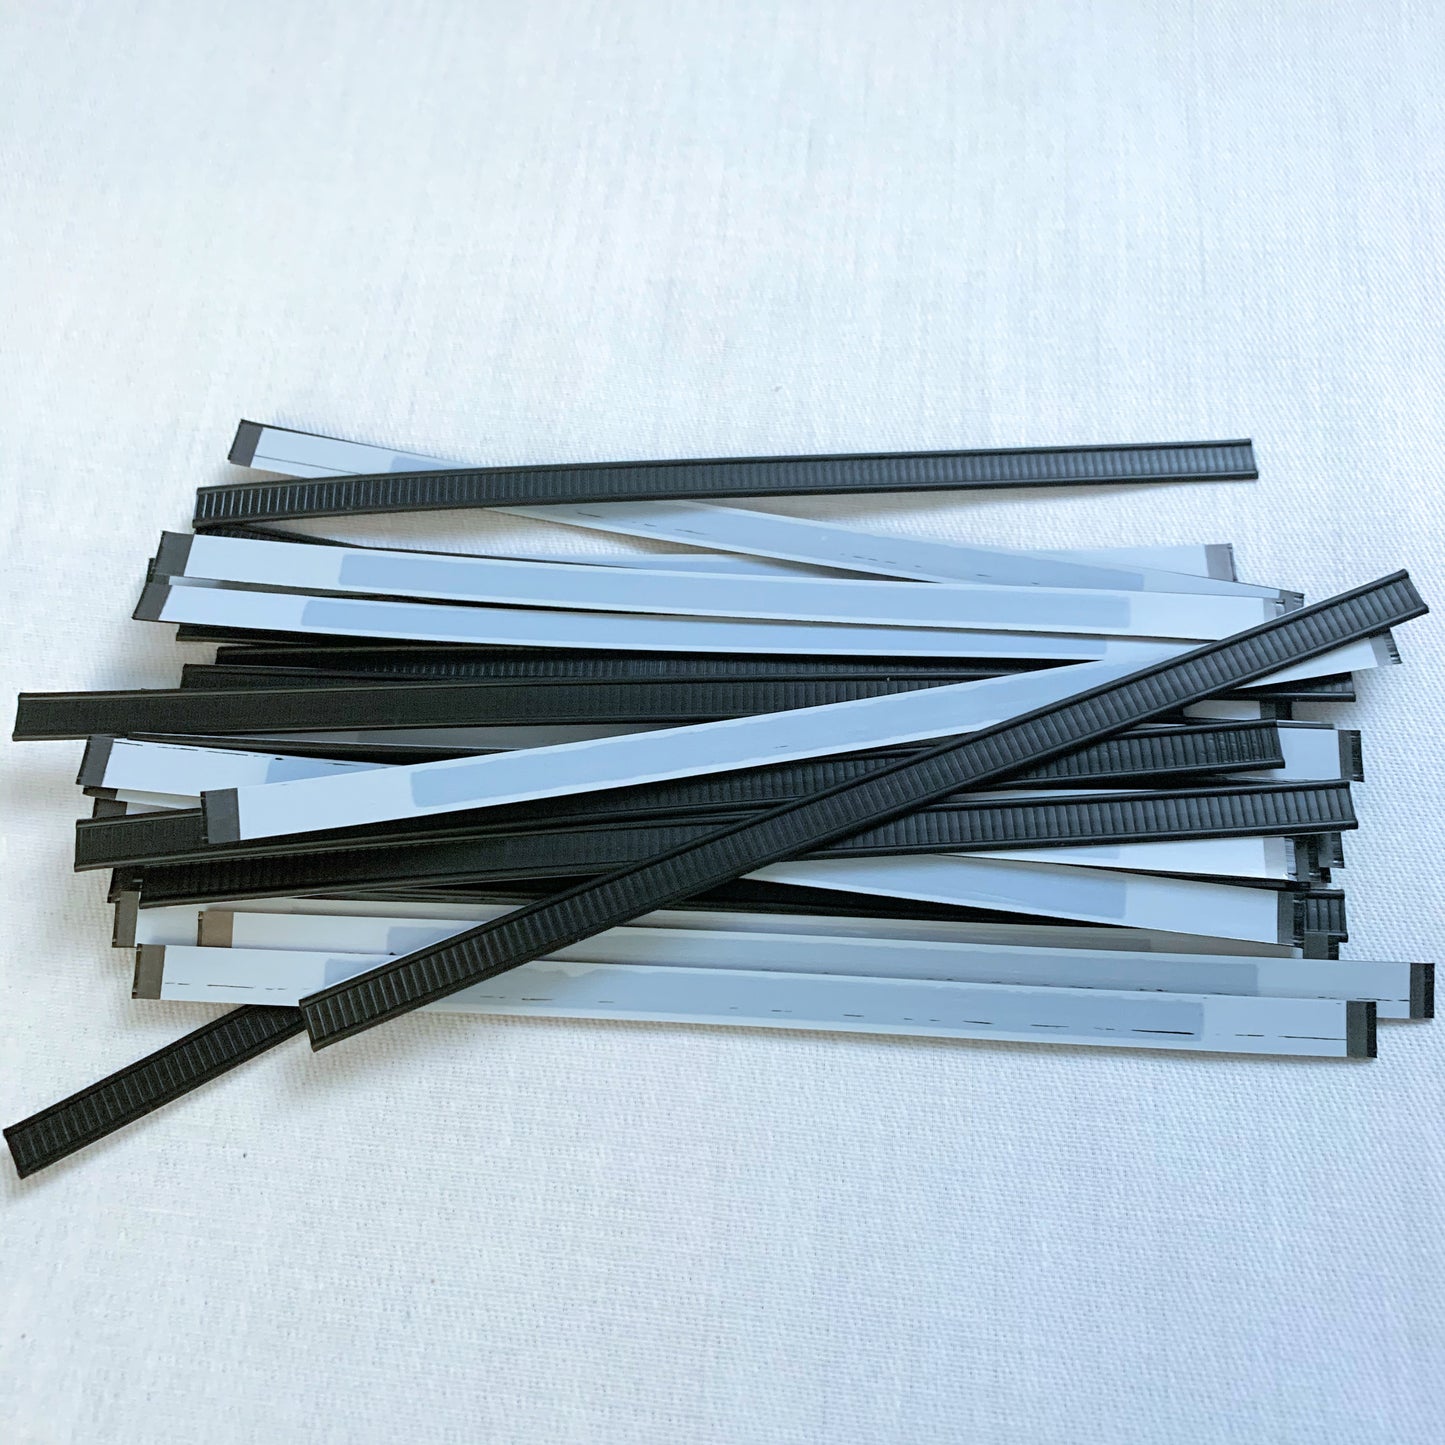 Flexible Double Wire Adhesive Plastic Nose Bridge Strips - 7" x 5/16" - 89mm x 8mm